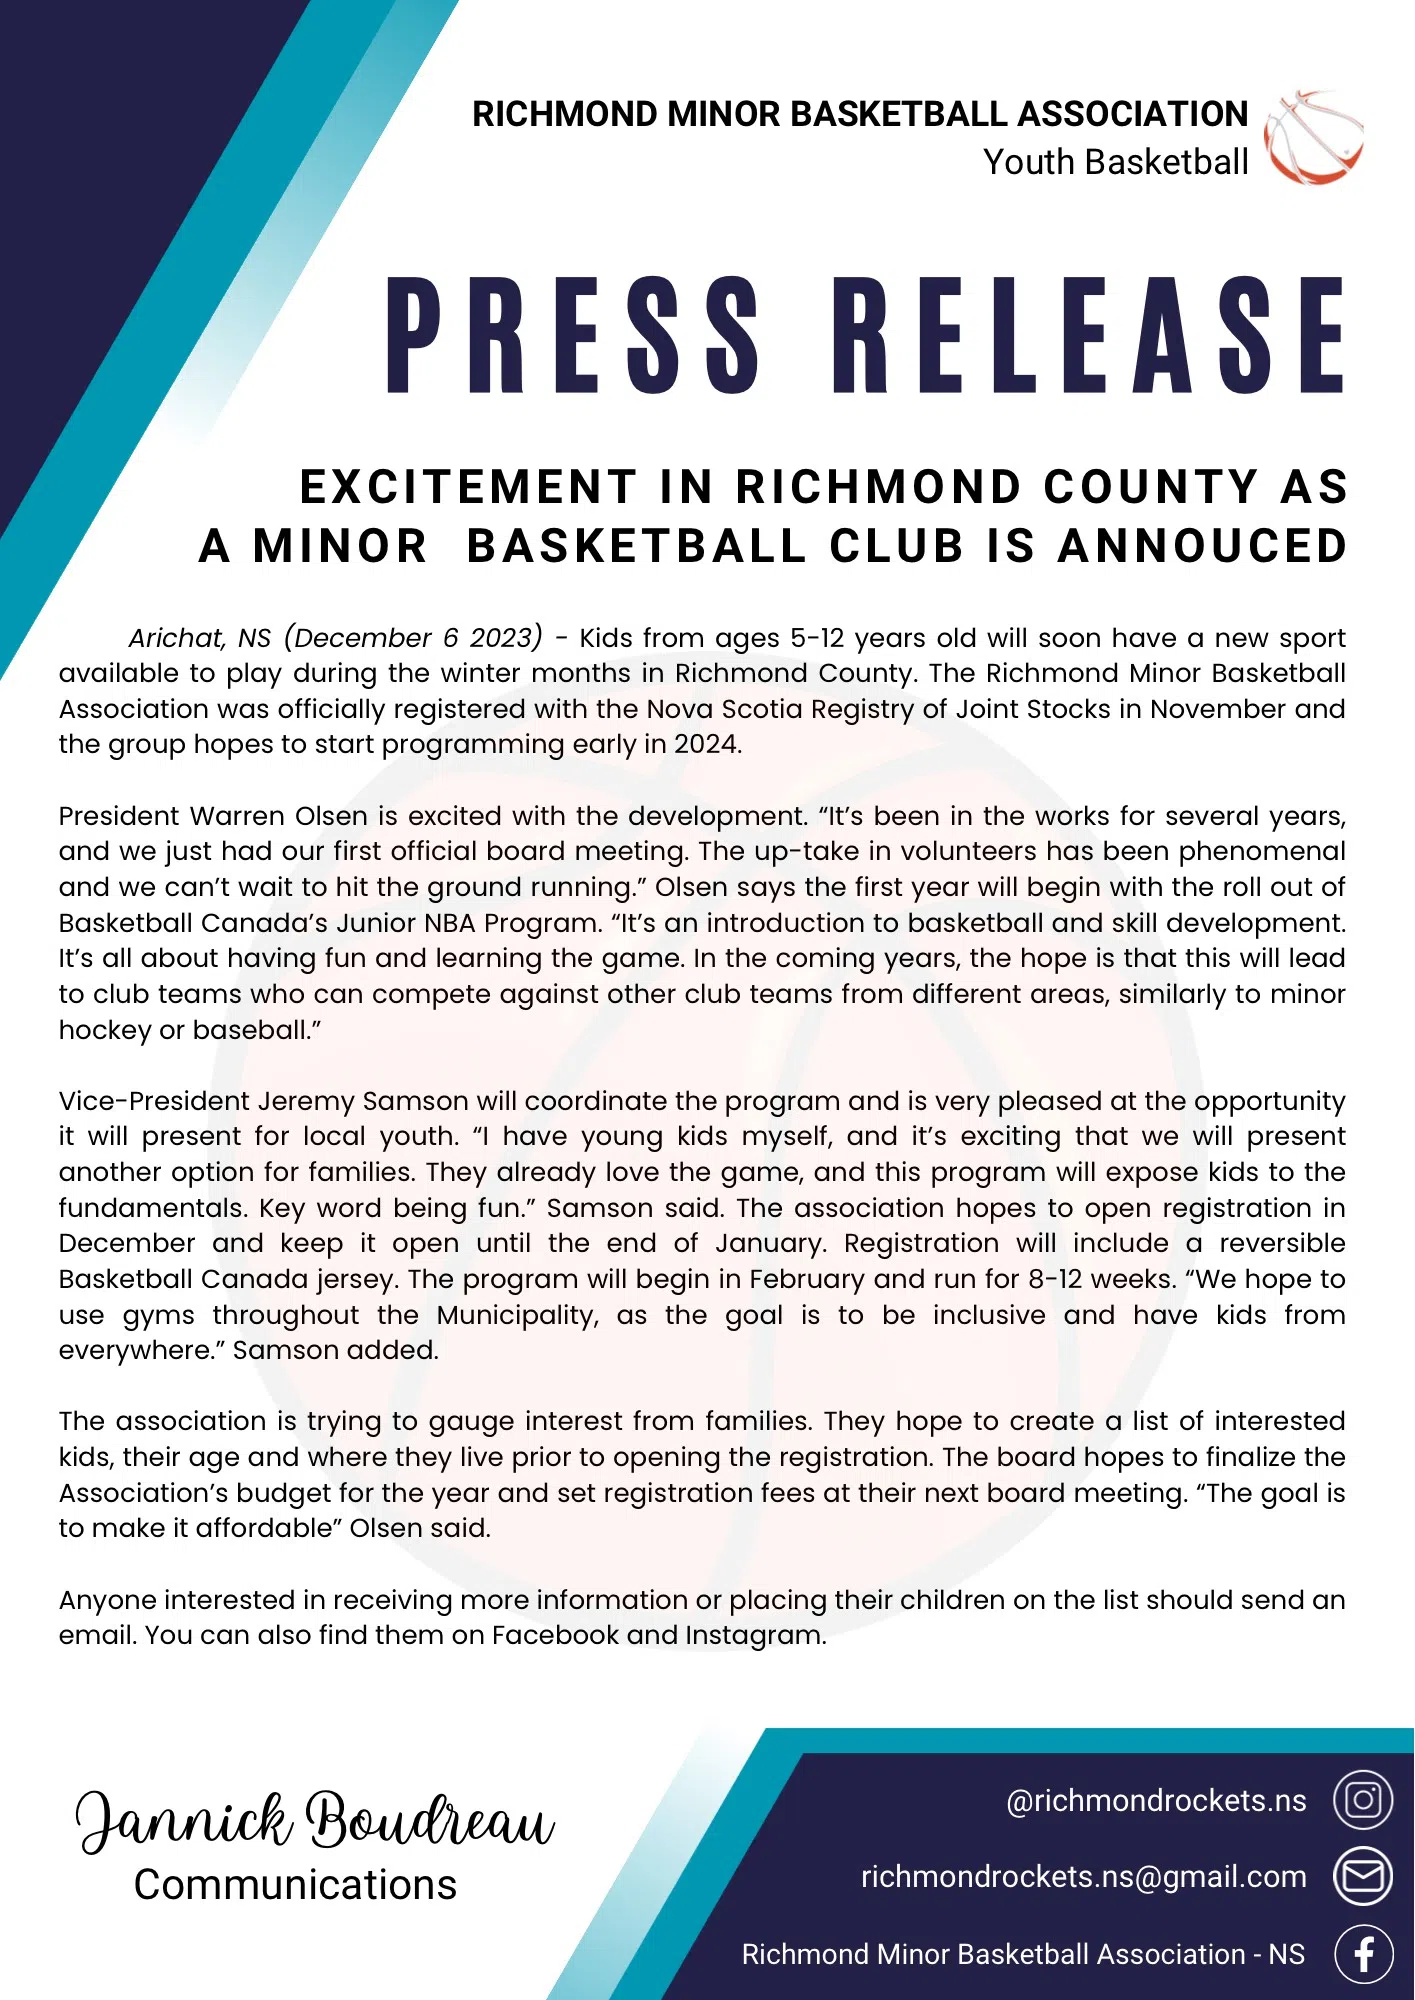 Minor Basketball Club coming to Richmond County